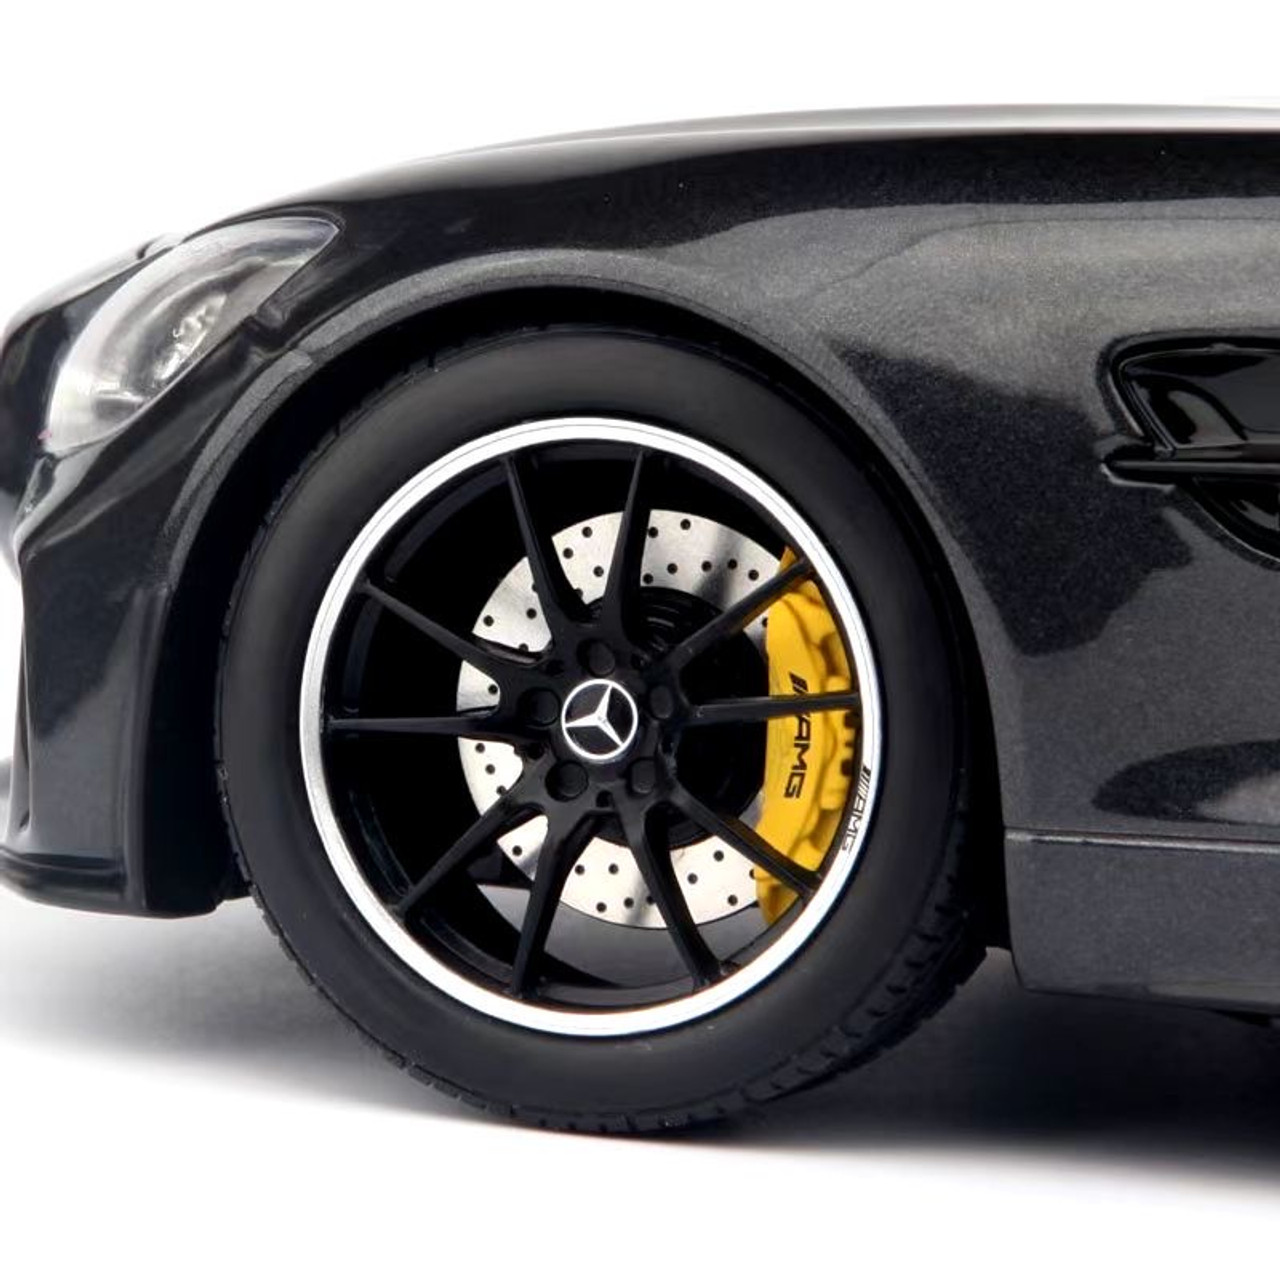 1/18 Norev Mercedes-Benz Mercedes-AMG AMG GT R GTR (Dark Grey Metallic) Diecast Car Model